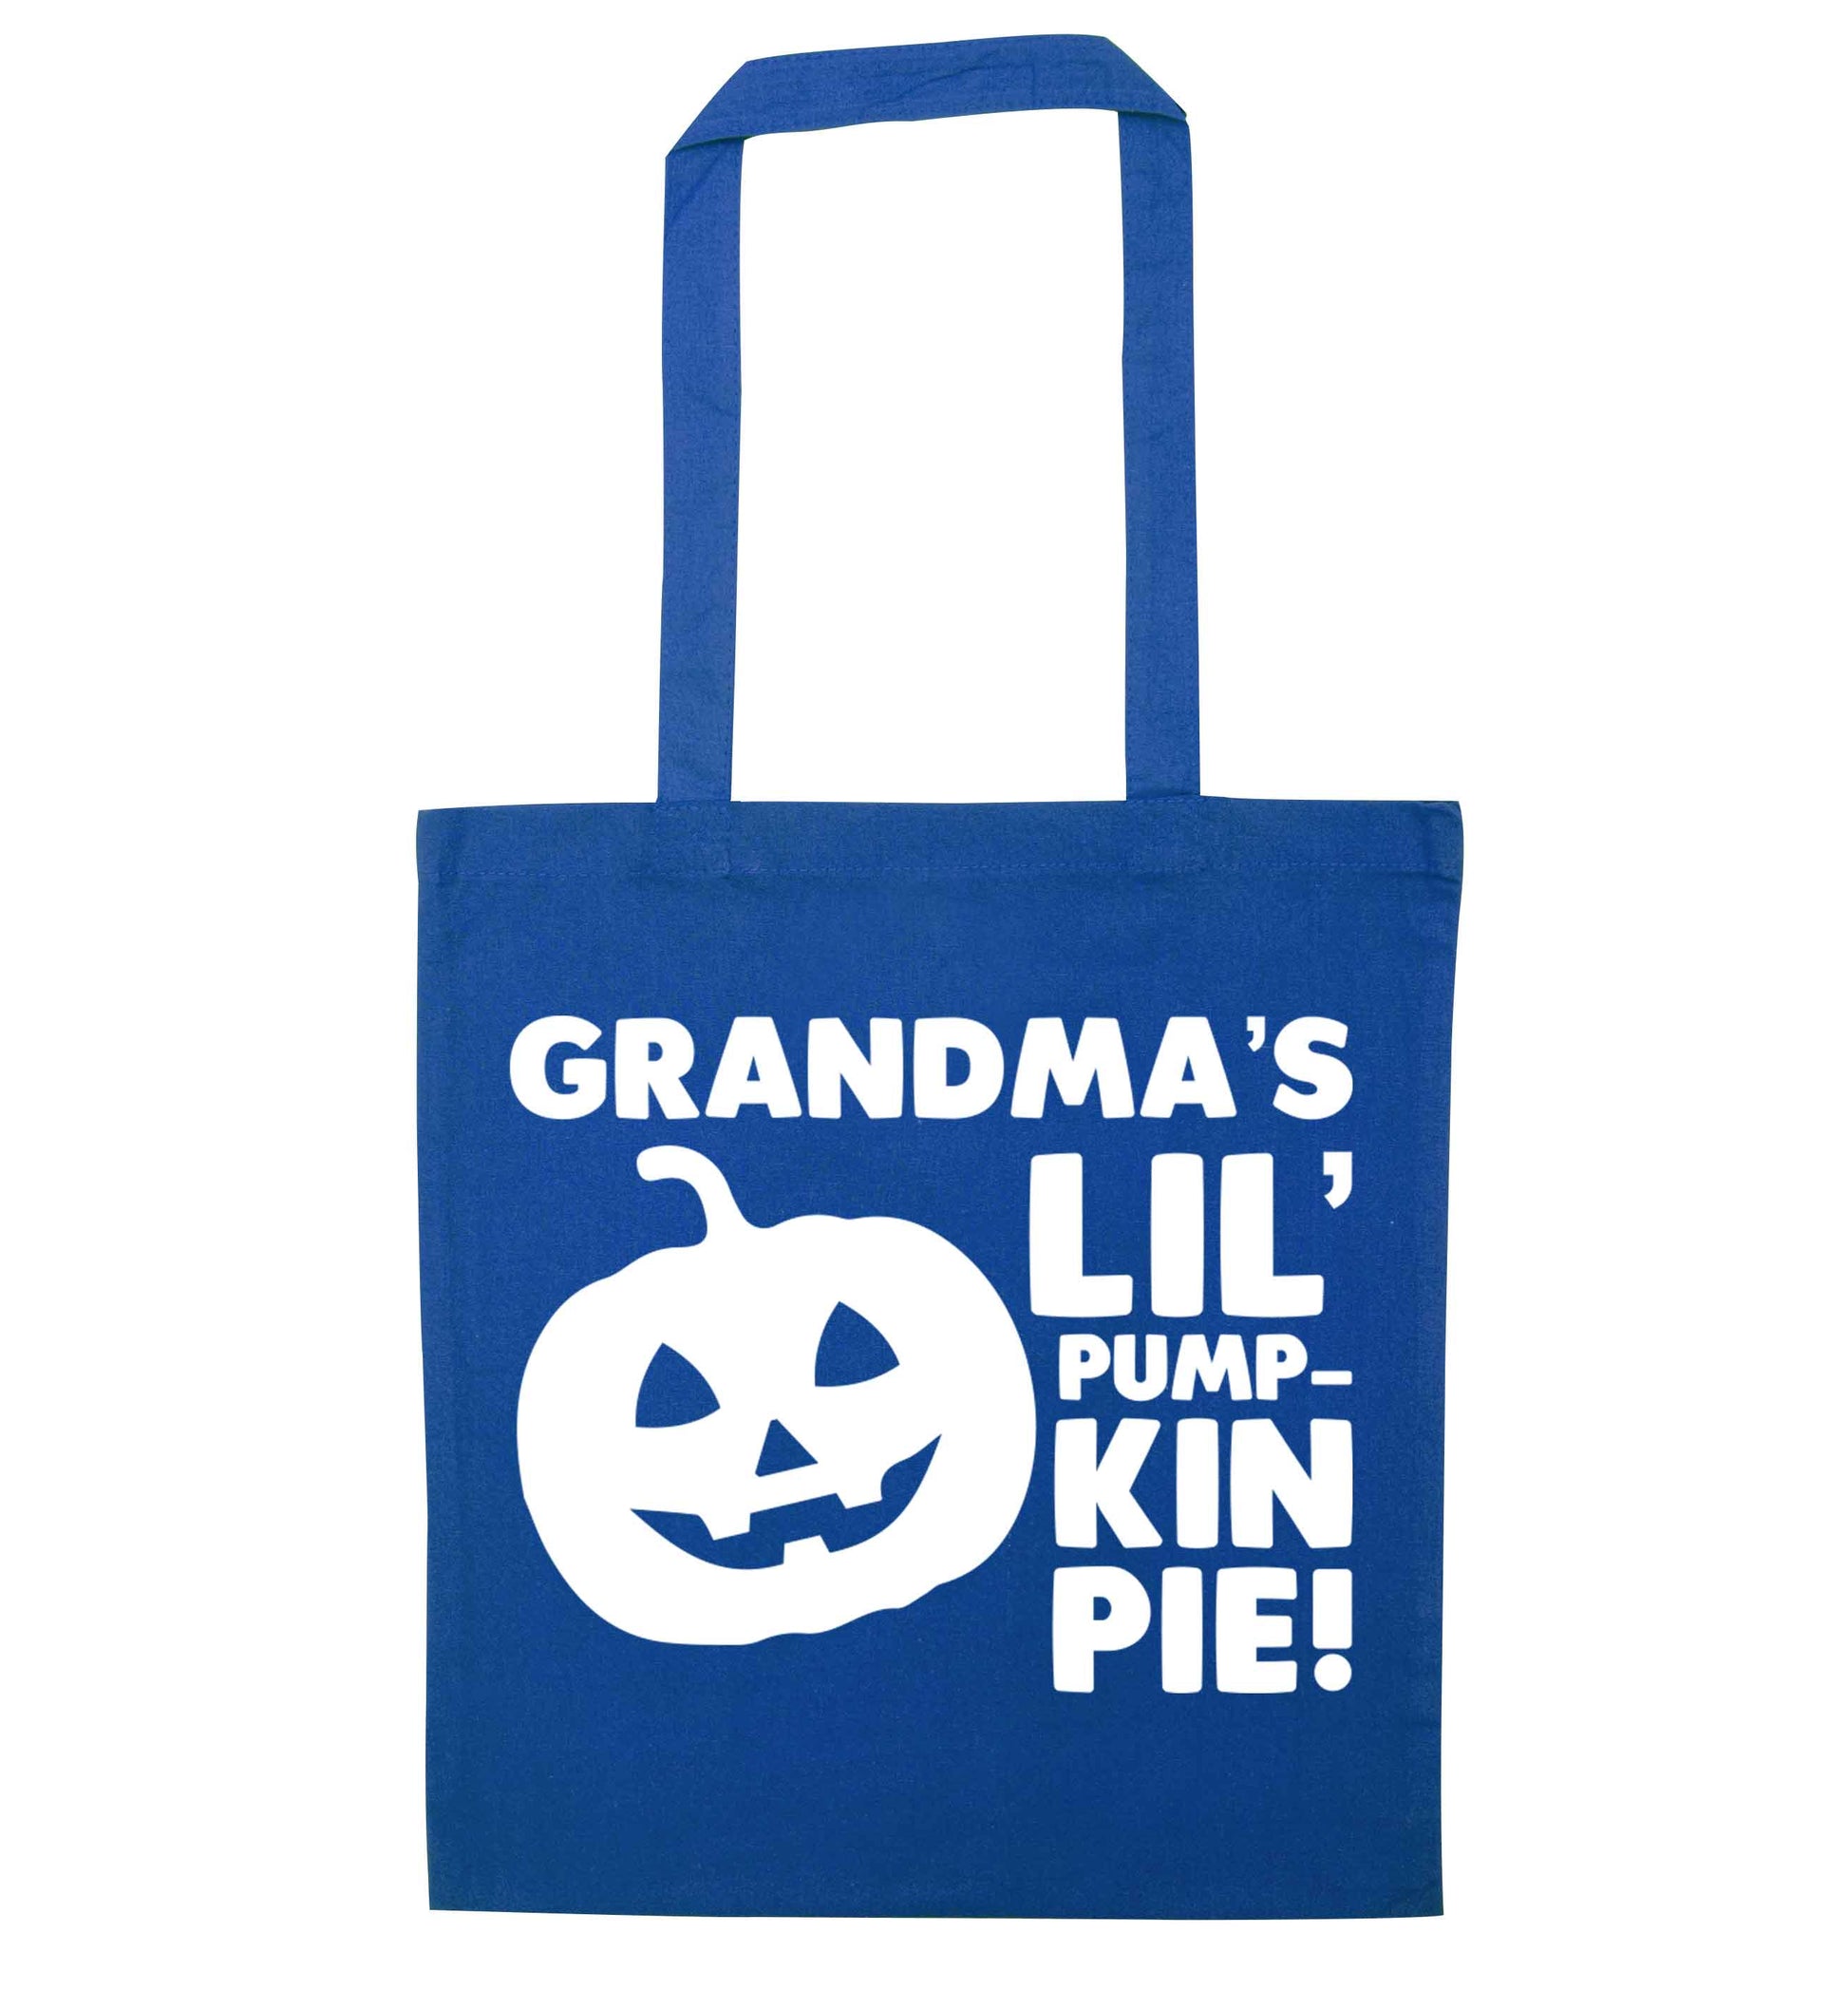 Grandma's lil' pumpkin pie blue tote bag